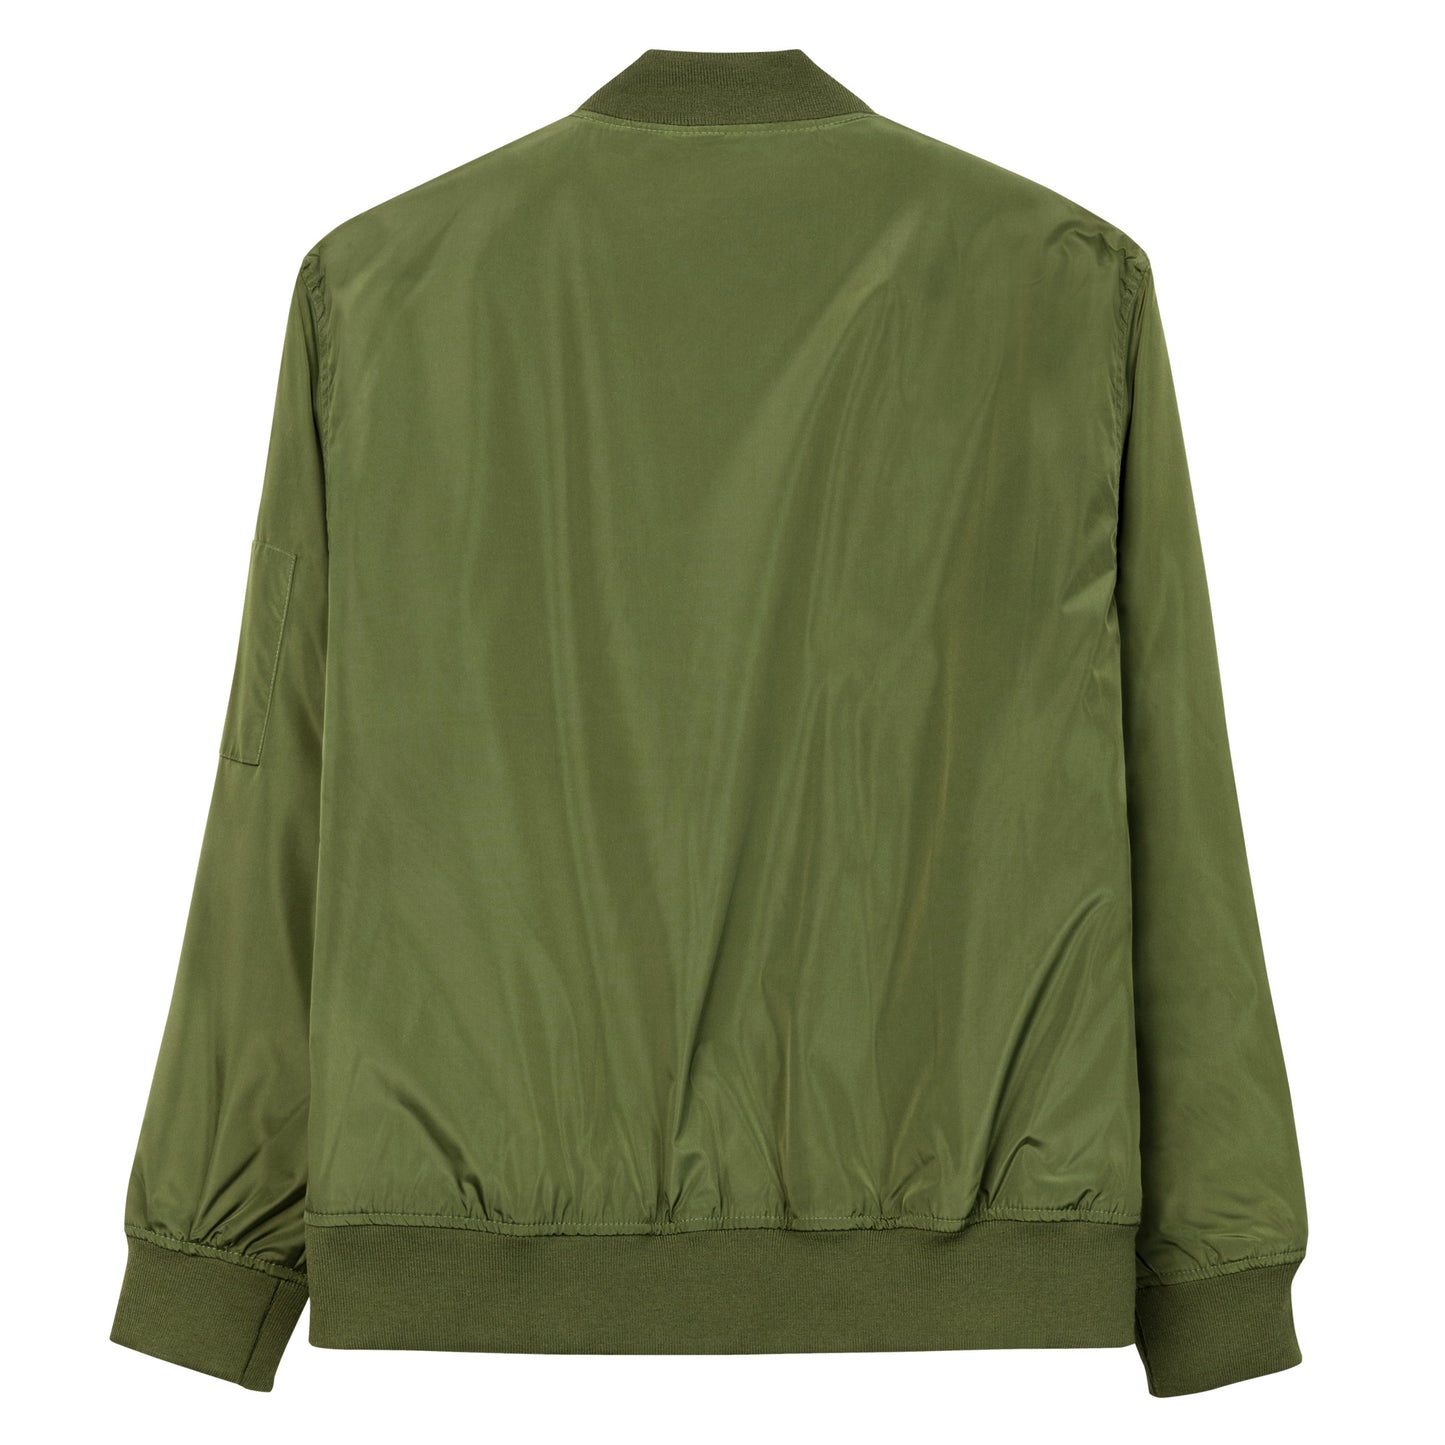 O1R Premium recycled bomber jacket